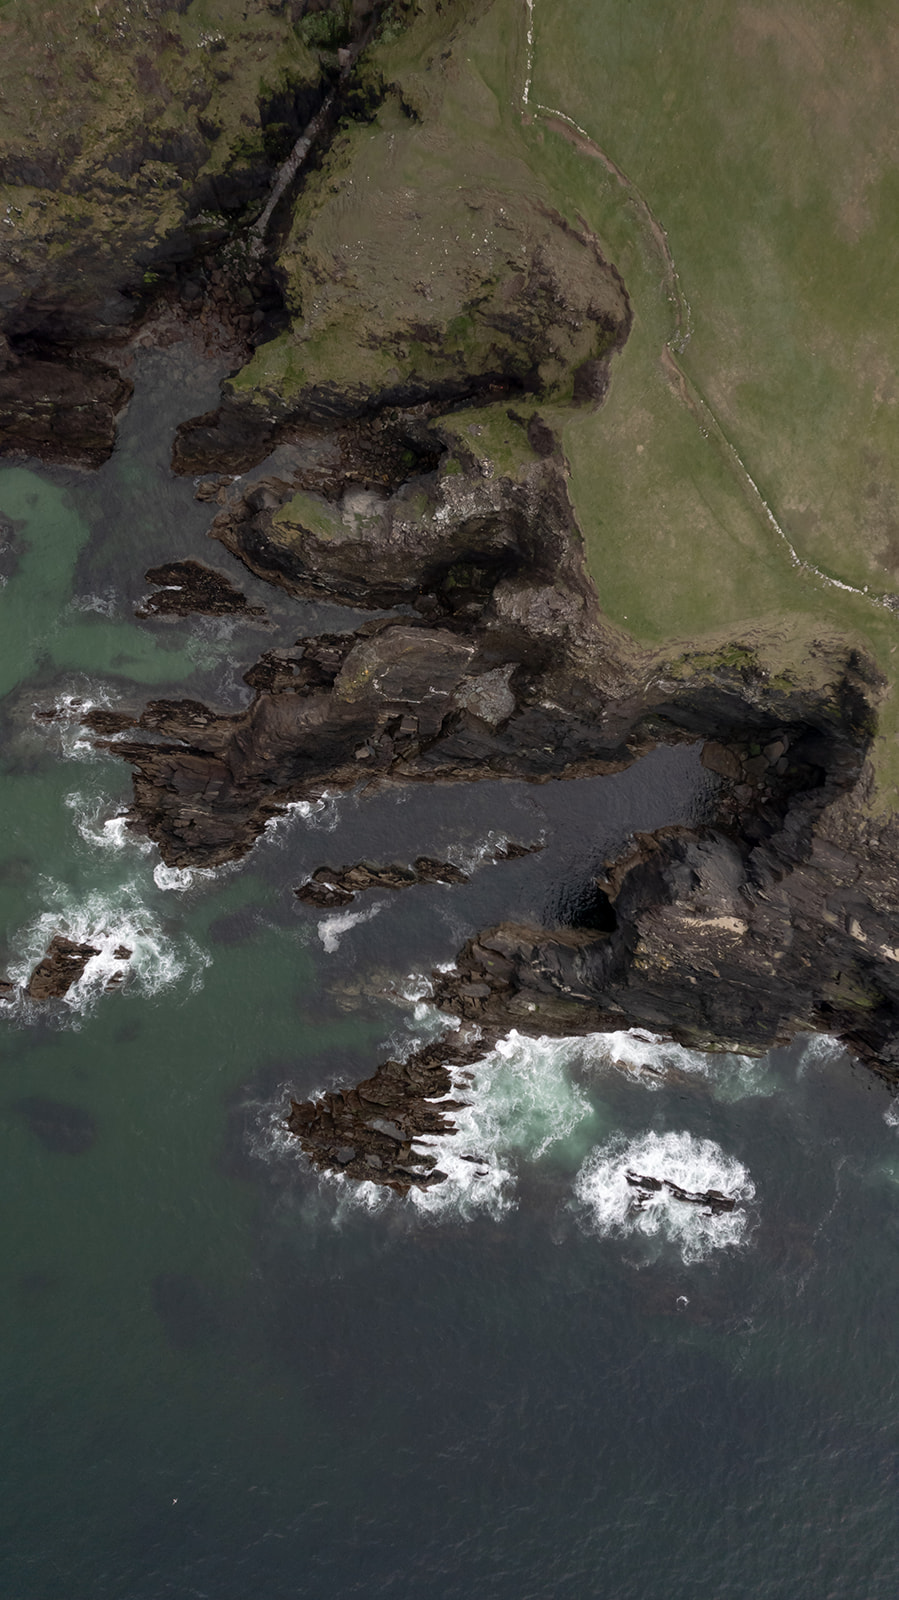 Dark Irish cliffs and coast line from a bird perspective.